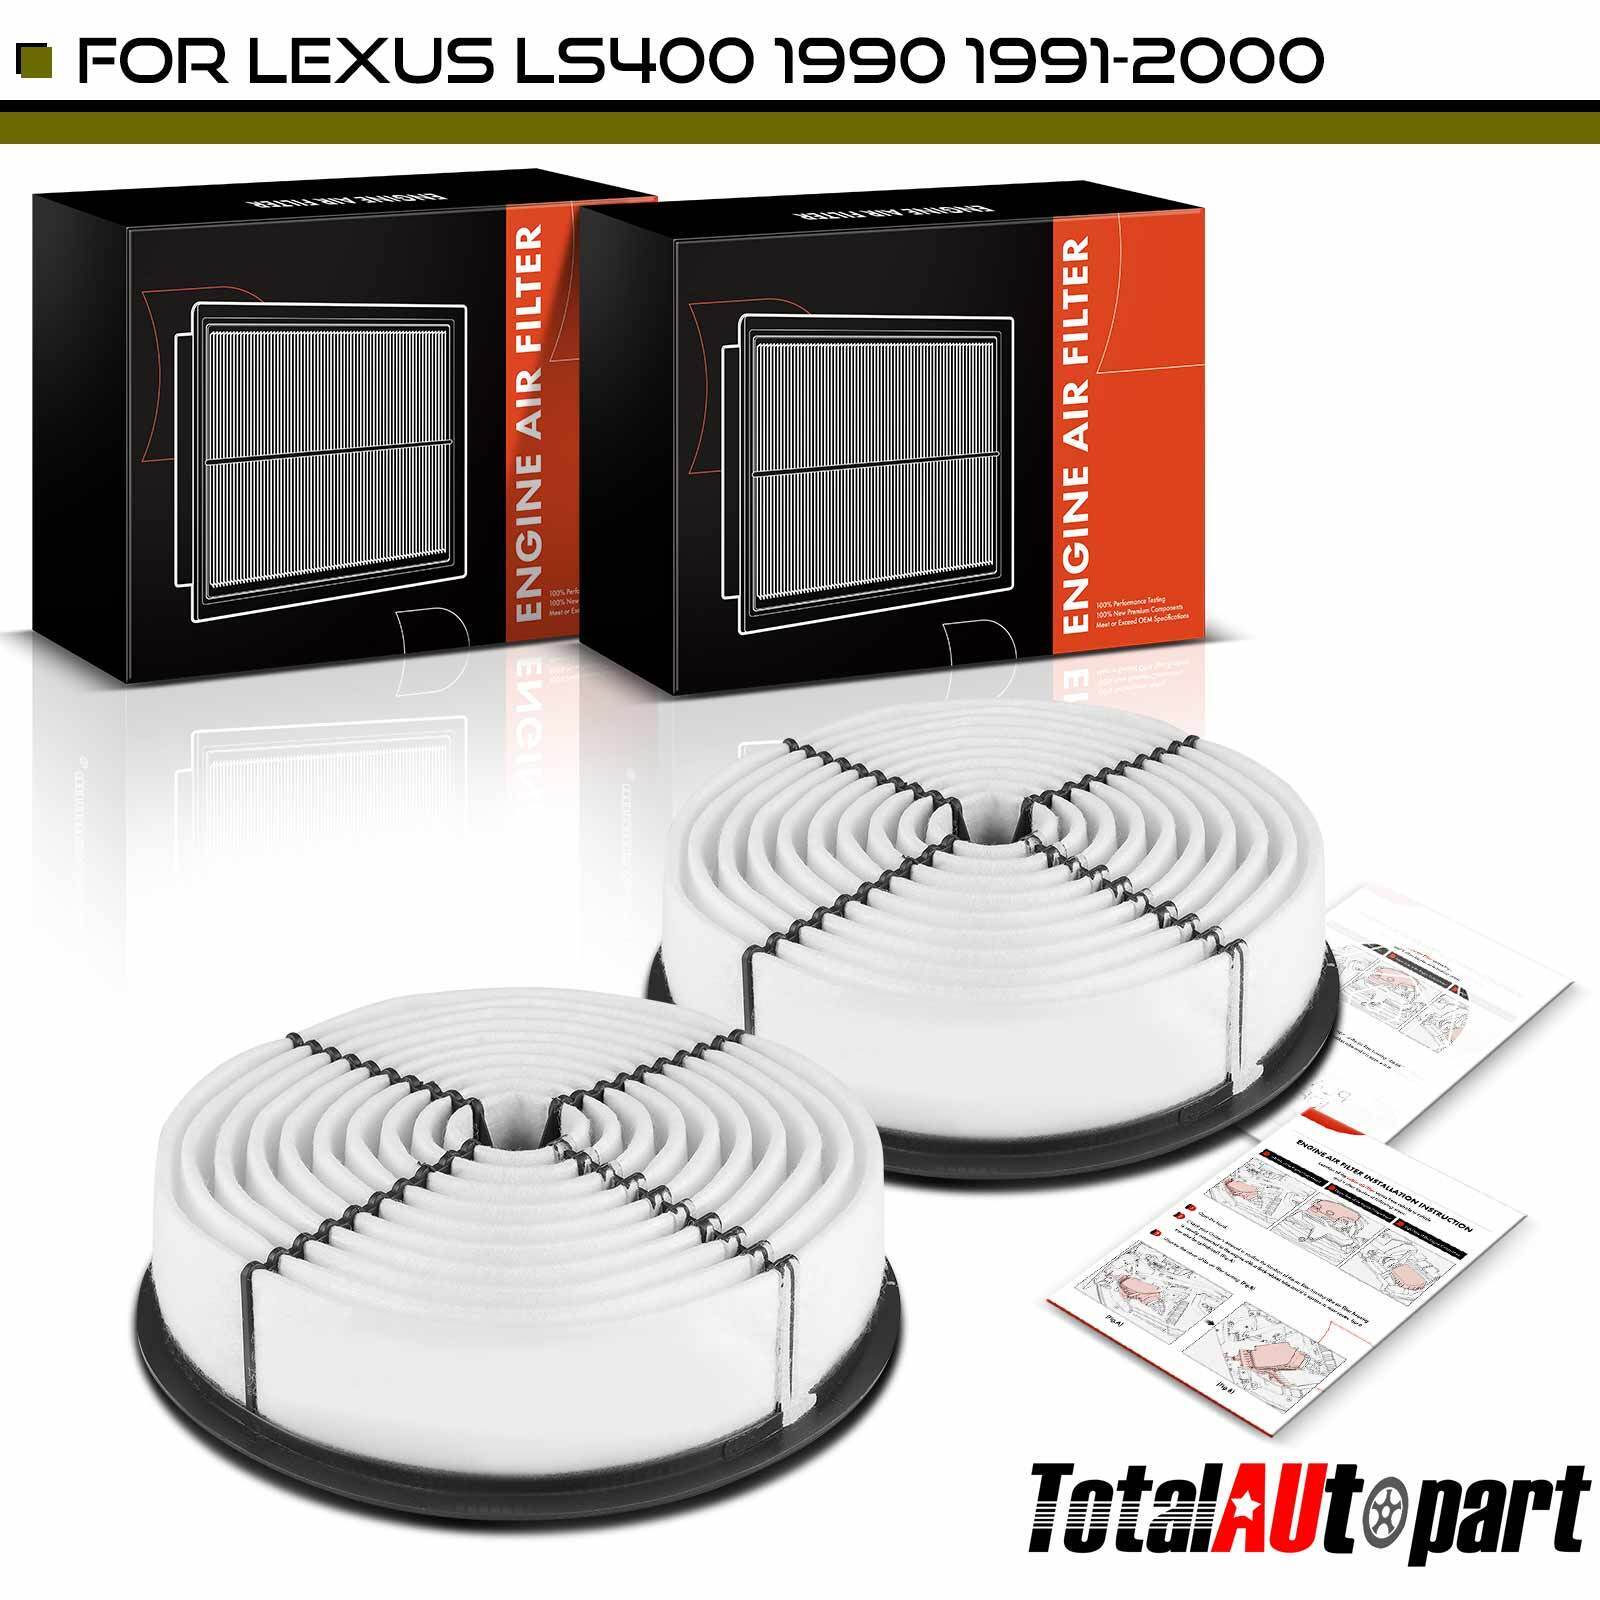 2Pcs Engine Air Filter for Lexus LS400 1990 1991 1992 1993 1994 1995-2000 4.0L